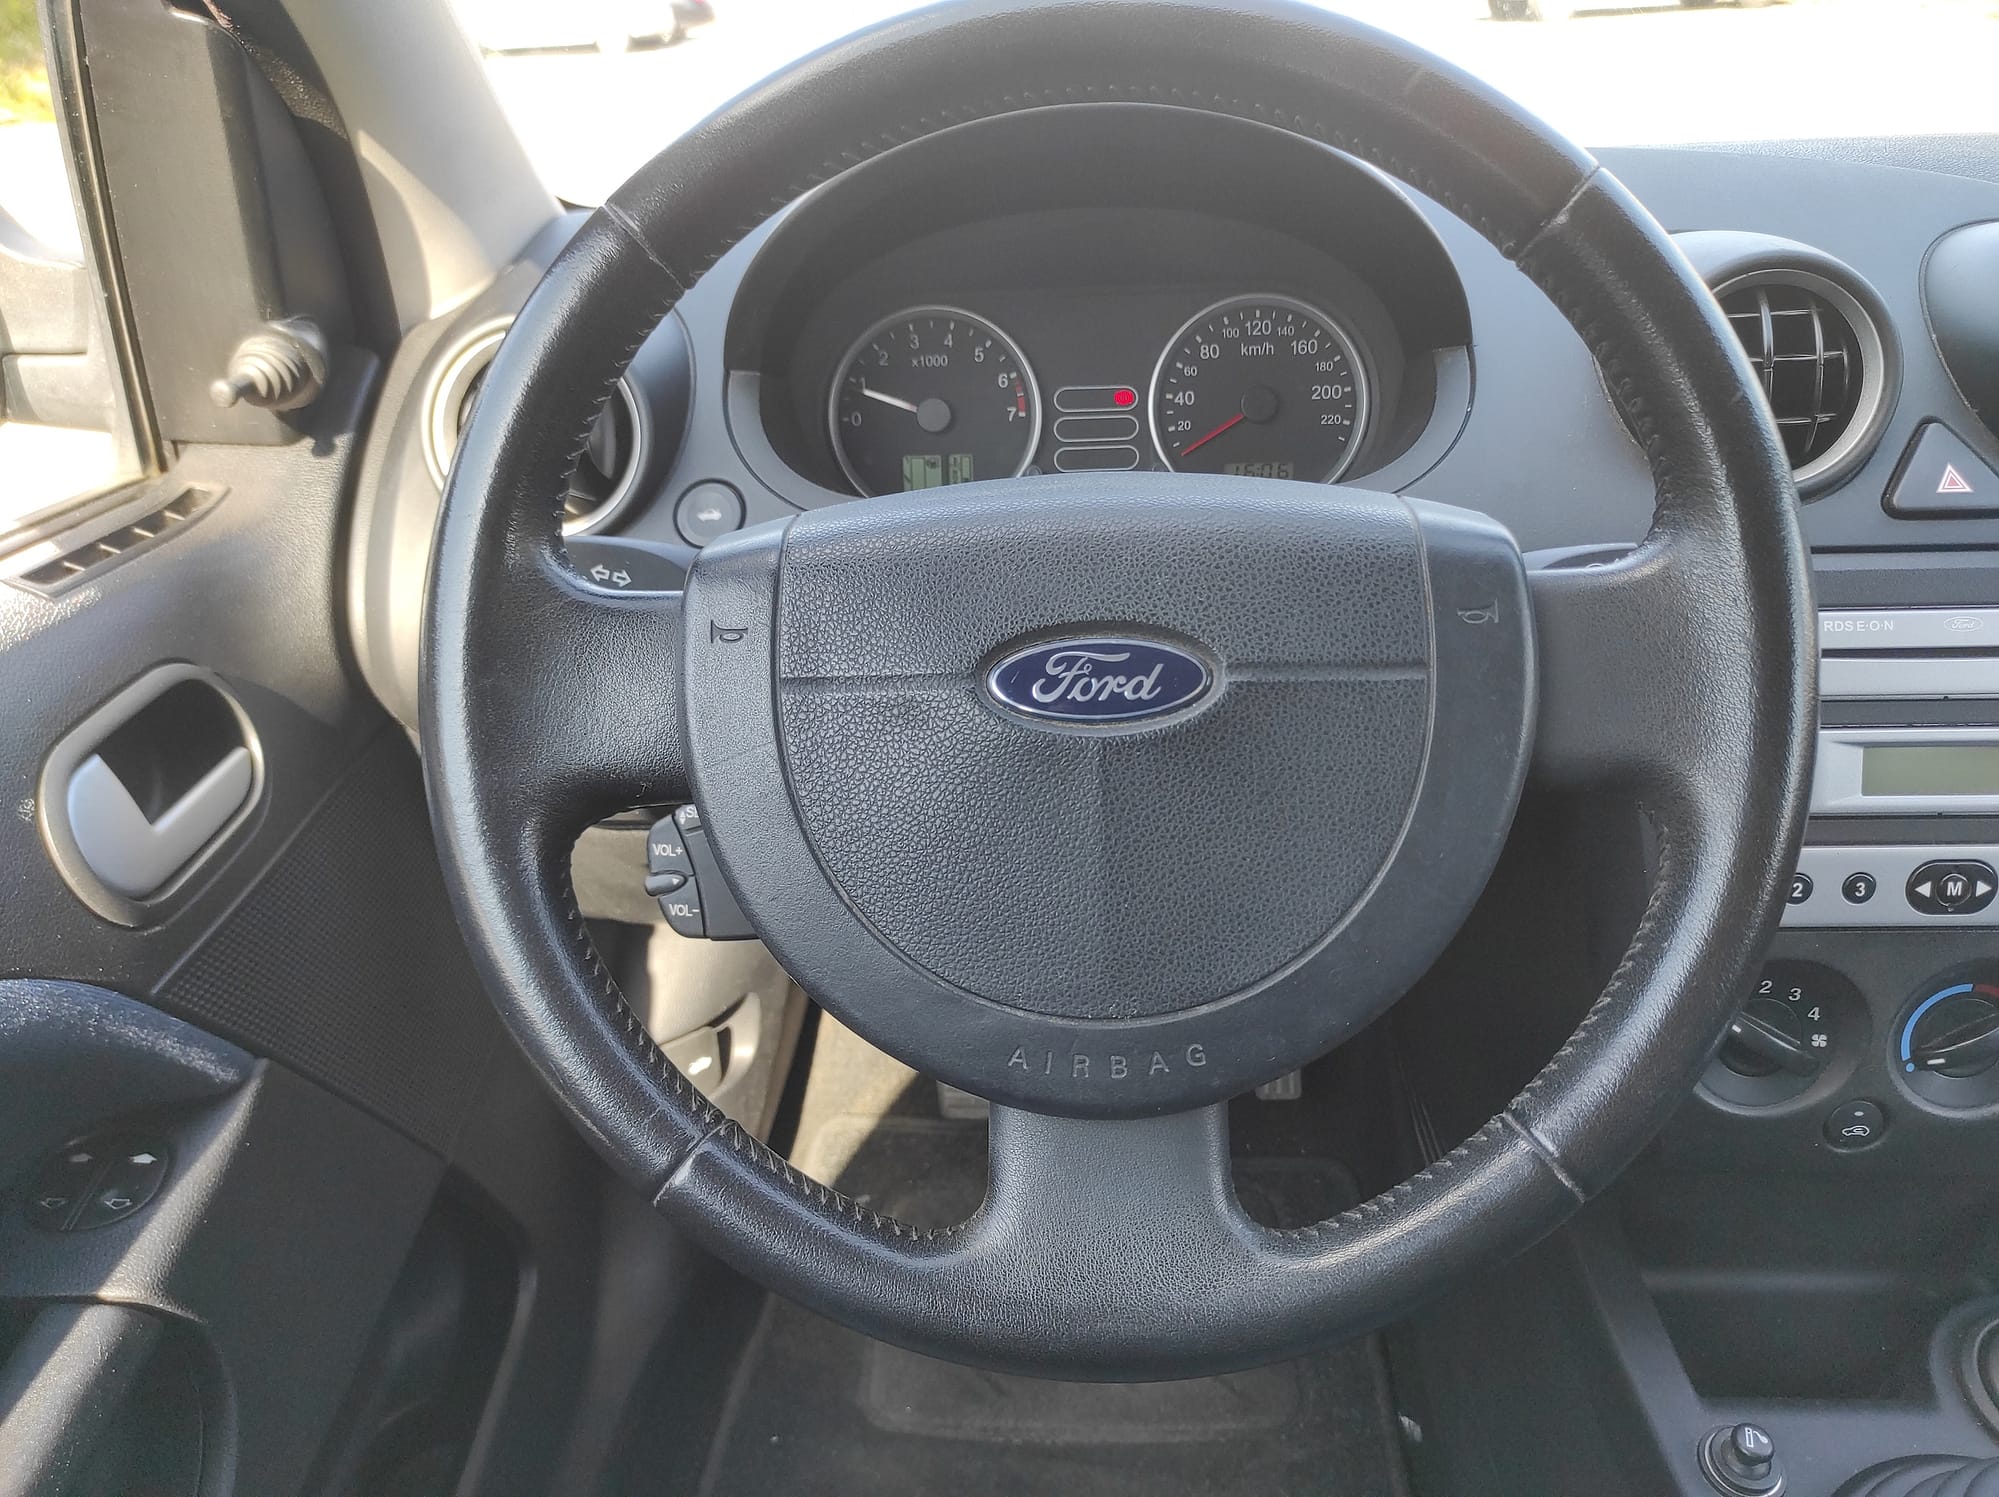 Ford Fiesta 2004 1.3 Ambiente - Automatix Motors - Voiture Occasion - Achat Voiture - Vente Voiture - Reprise Voiture